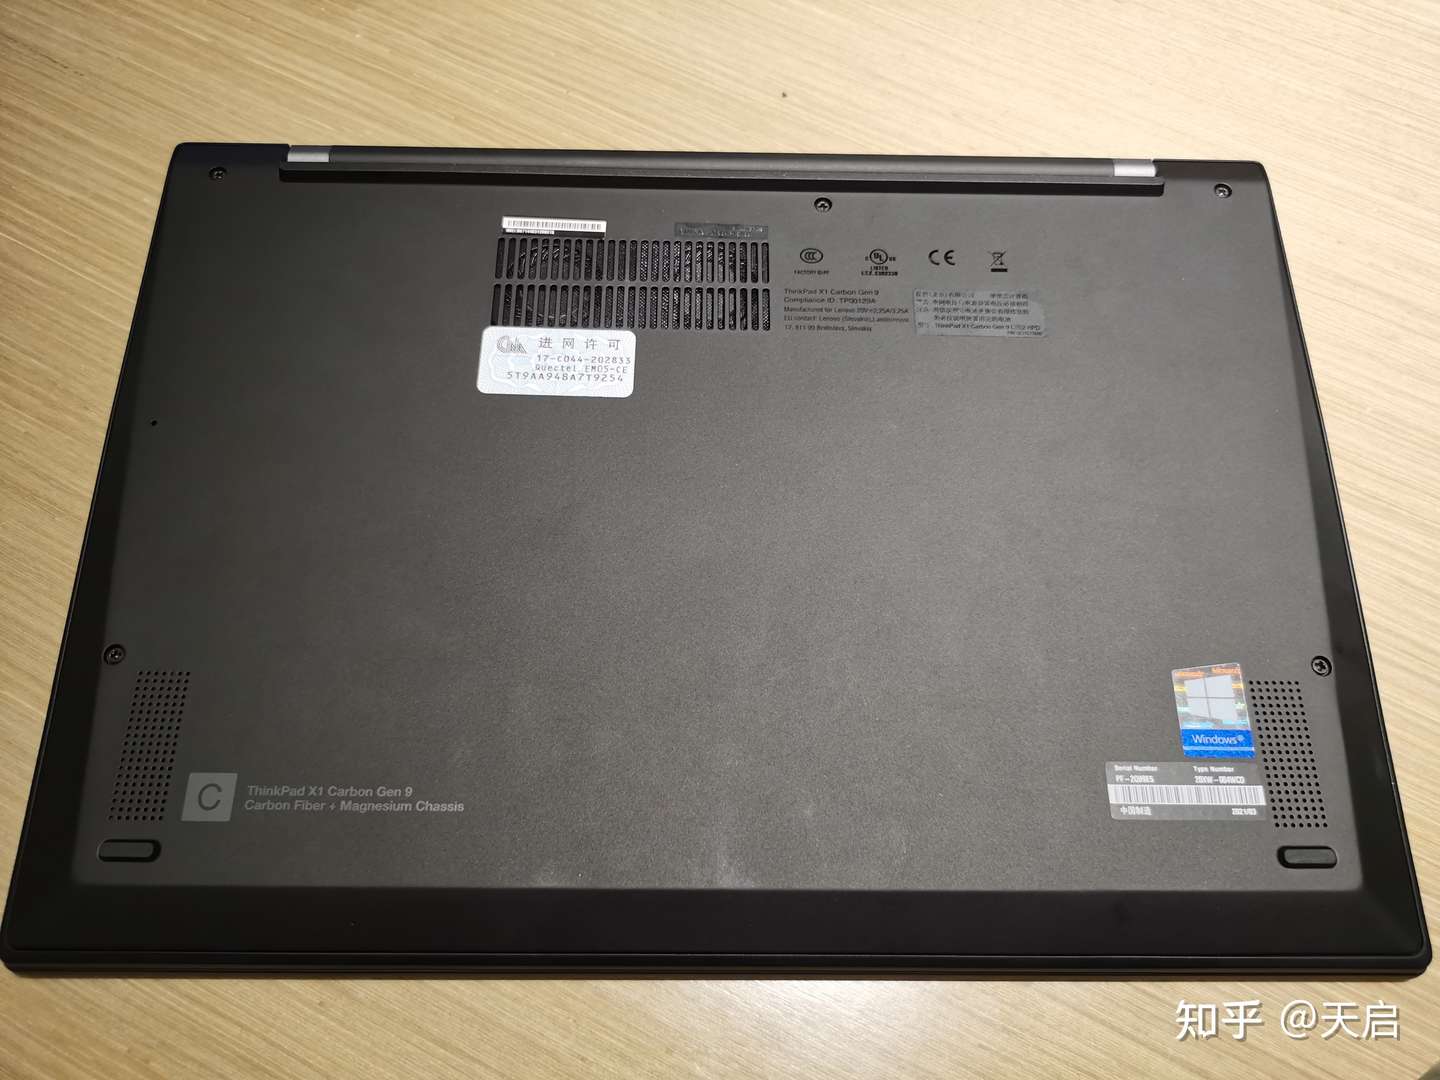 ThinkPad X1 Carbon Gen9简单上手- 知乎